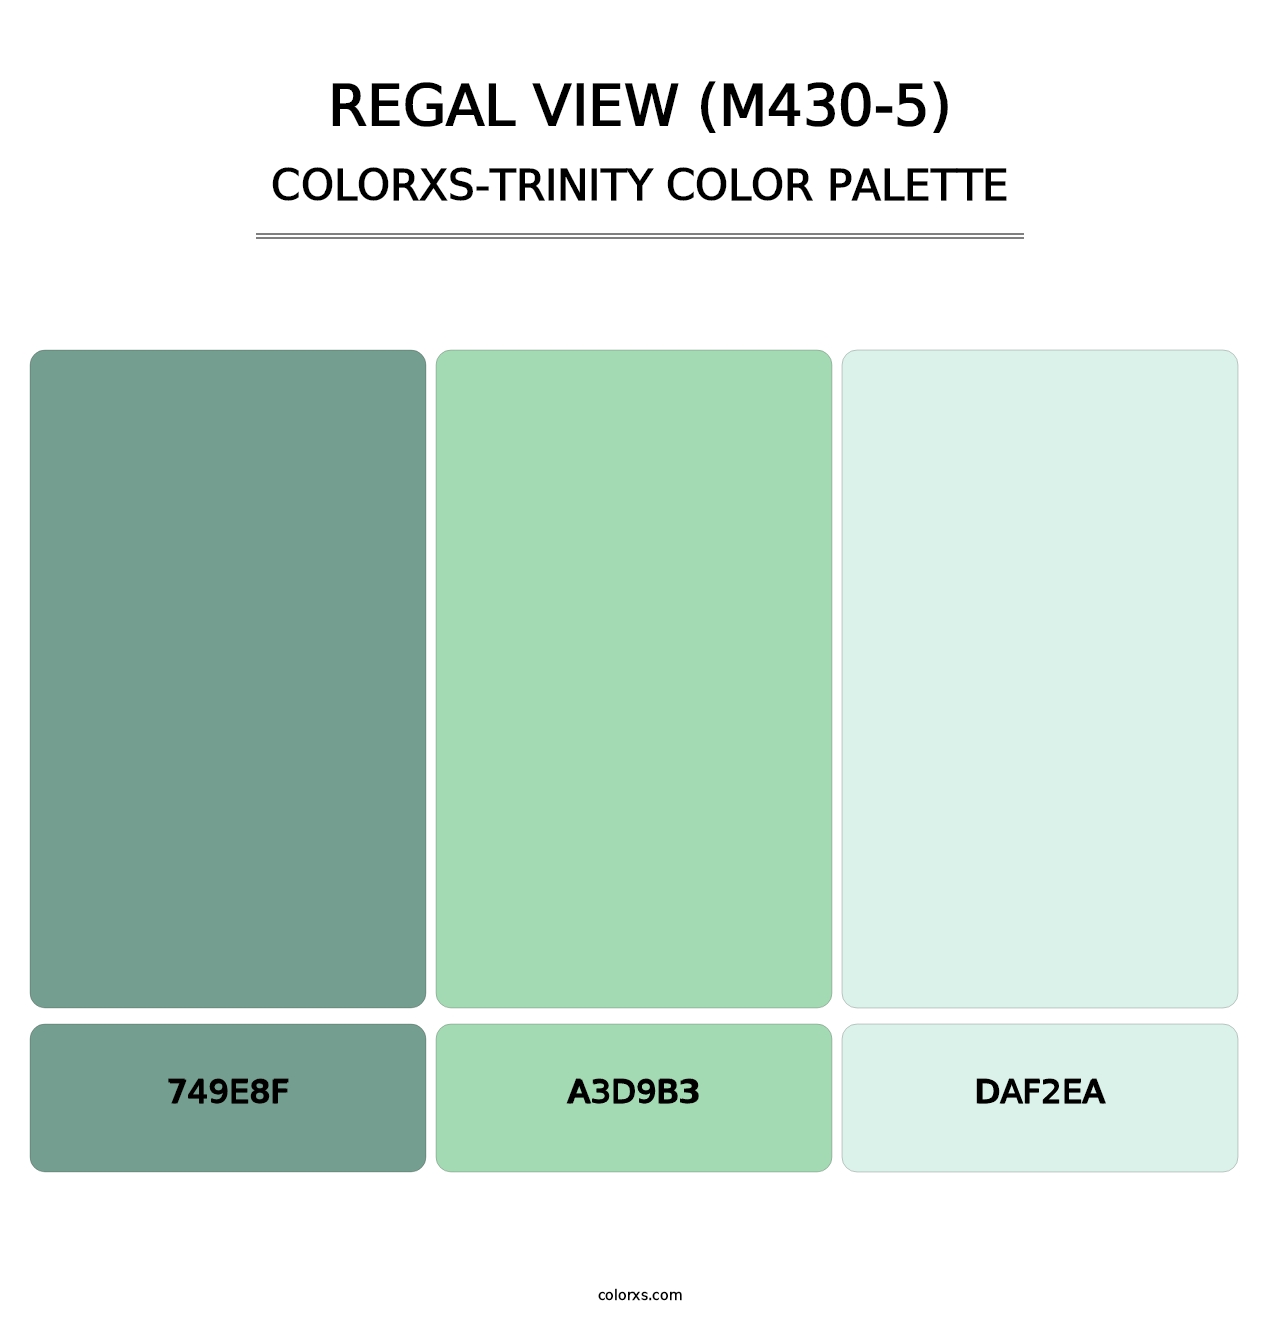 Regal View (M430-5) - Colorxs Trinity Palette